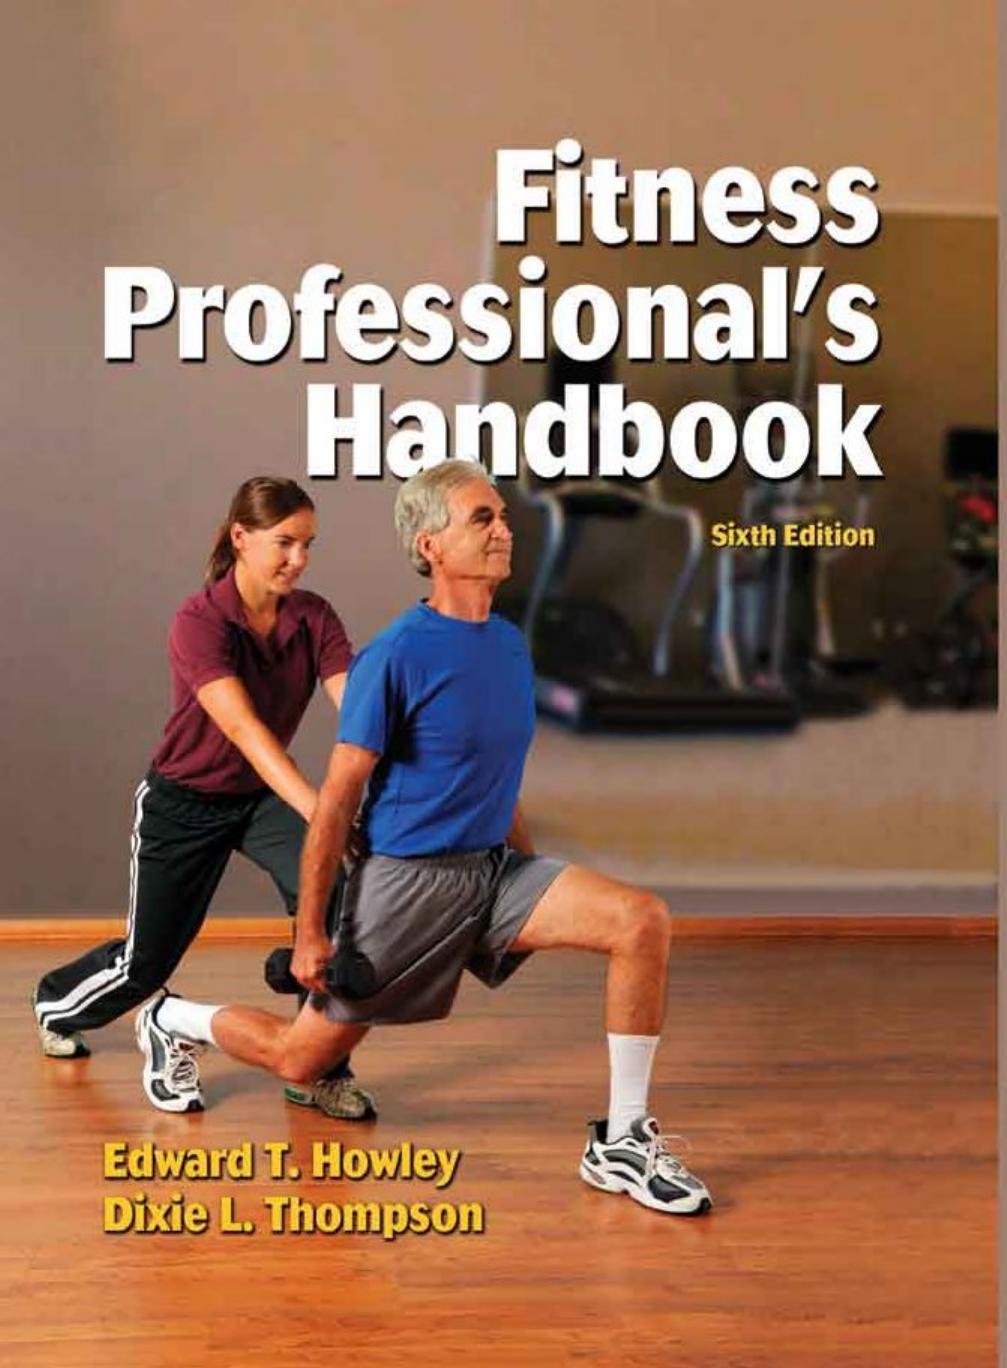 Fitness Professional's Handbook 6th Edition - Edward T. Howley.jpg